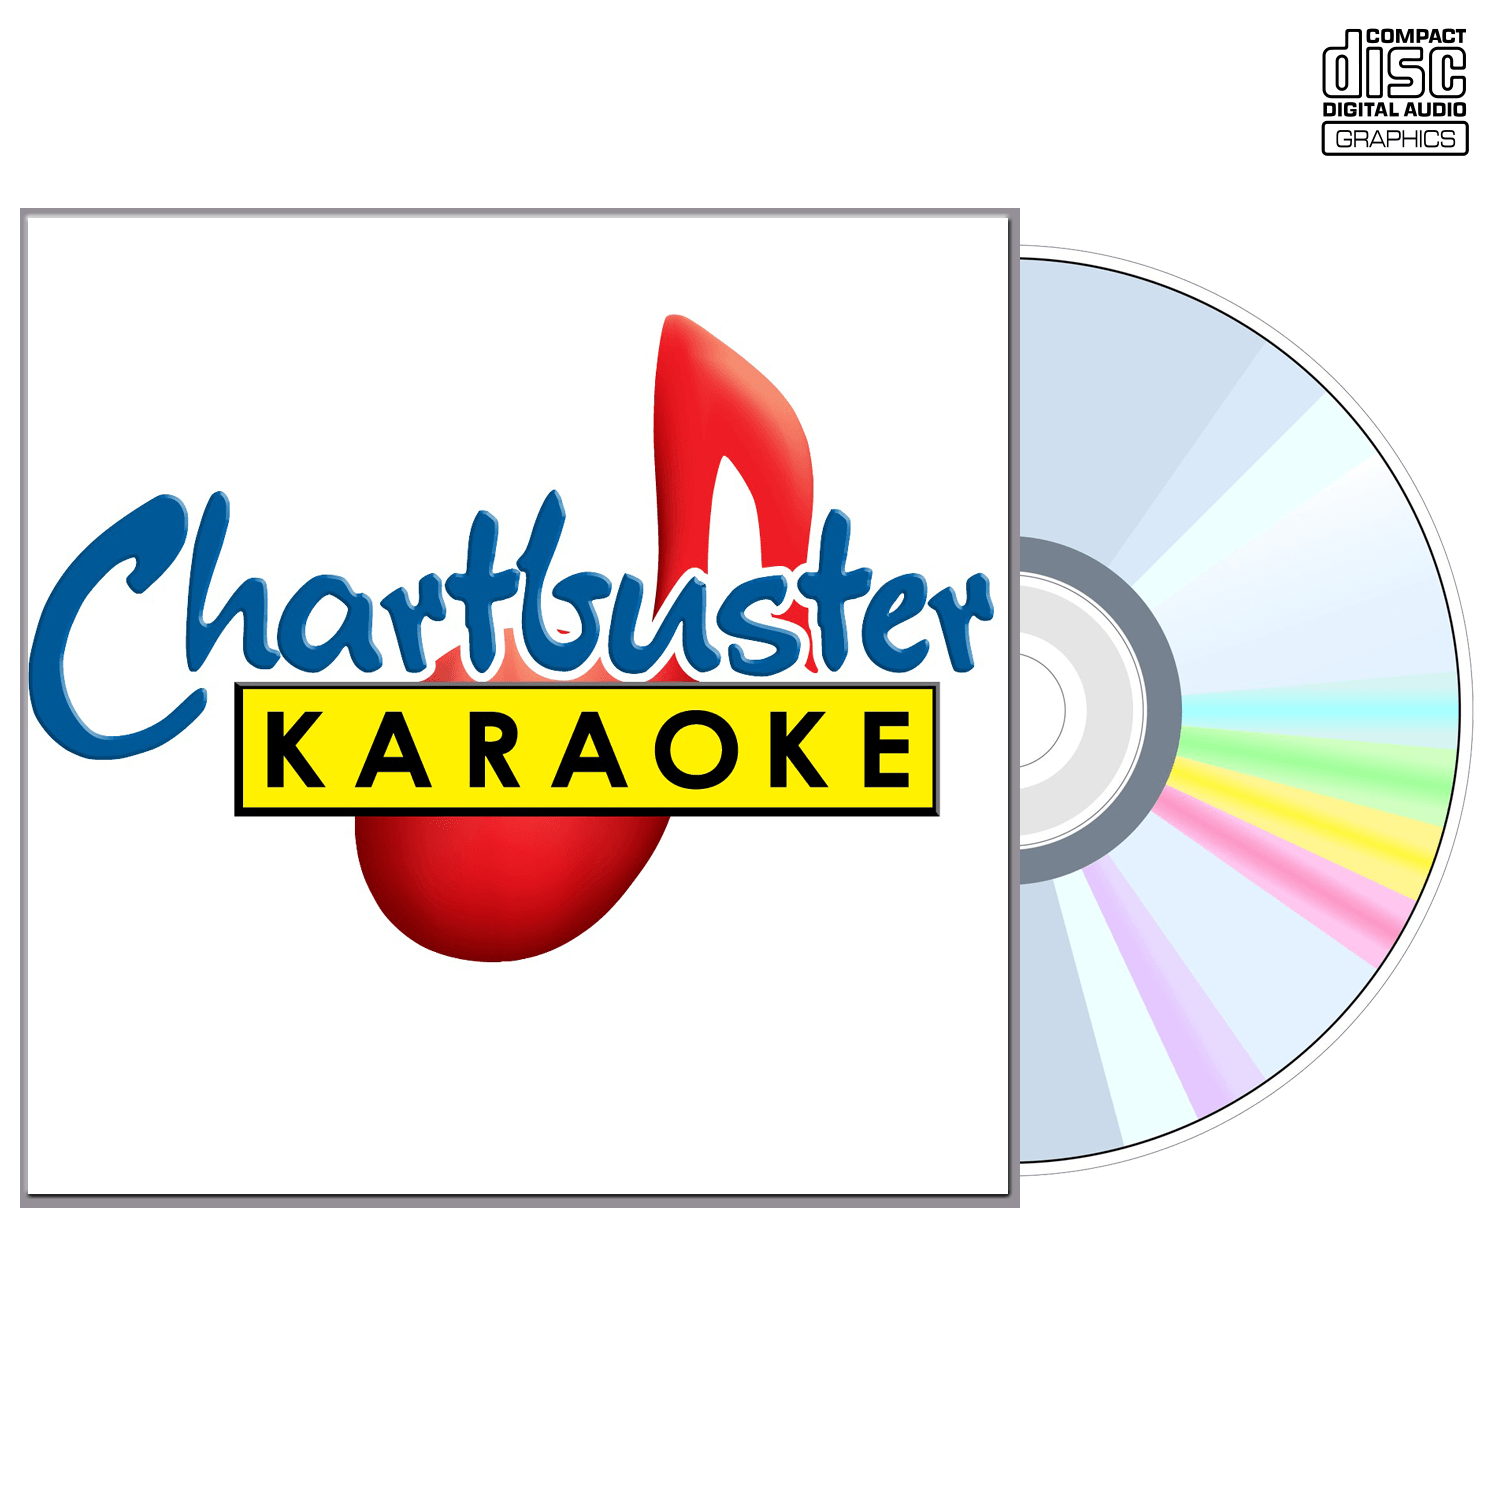 Clay Aiken - CD+G - Chartbuster Karaoke - Karaoke Home Entertainment